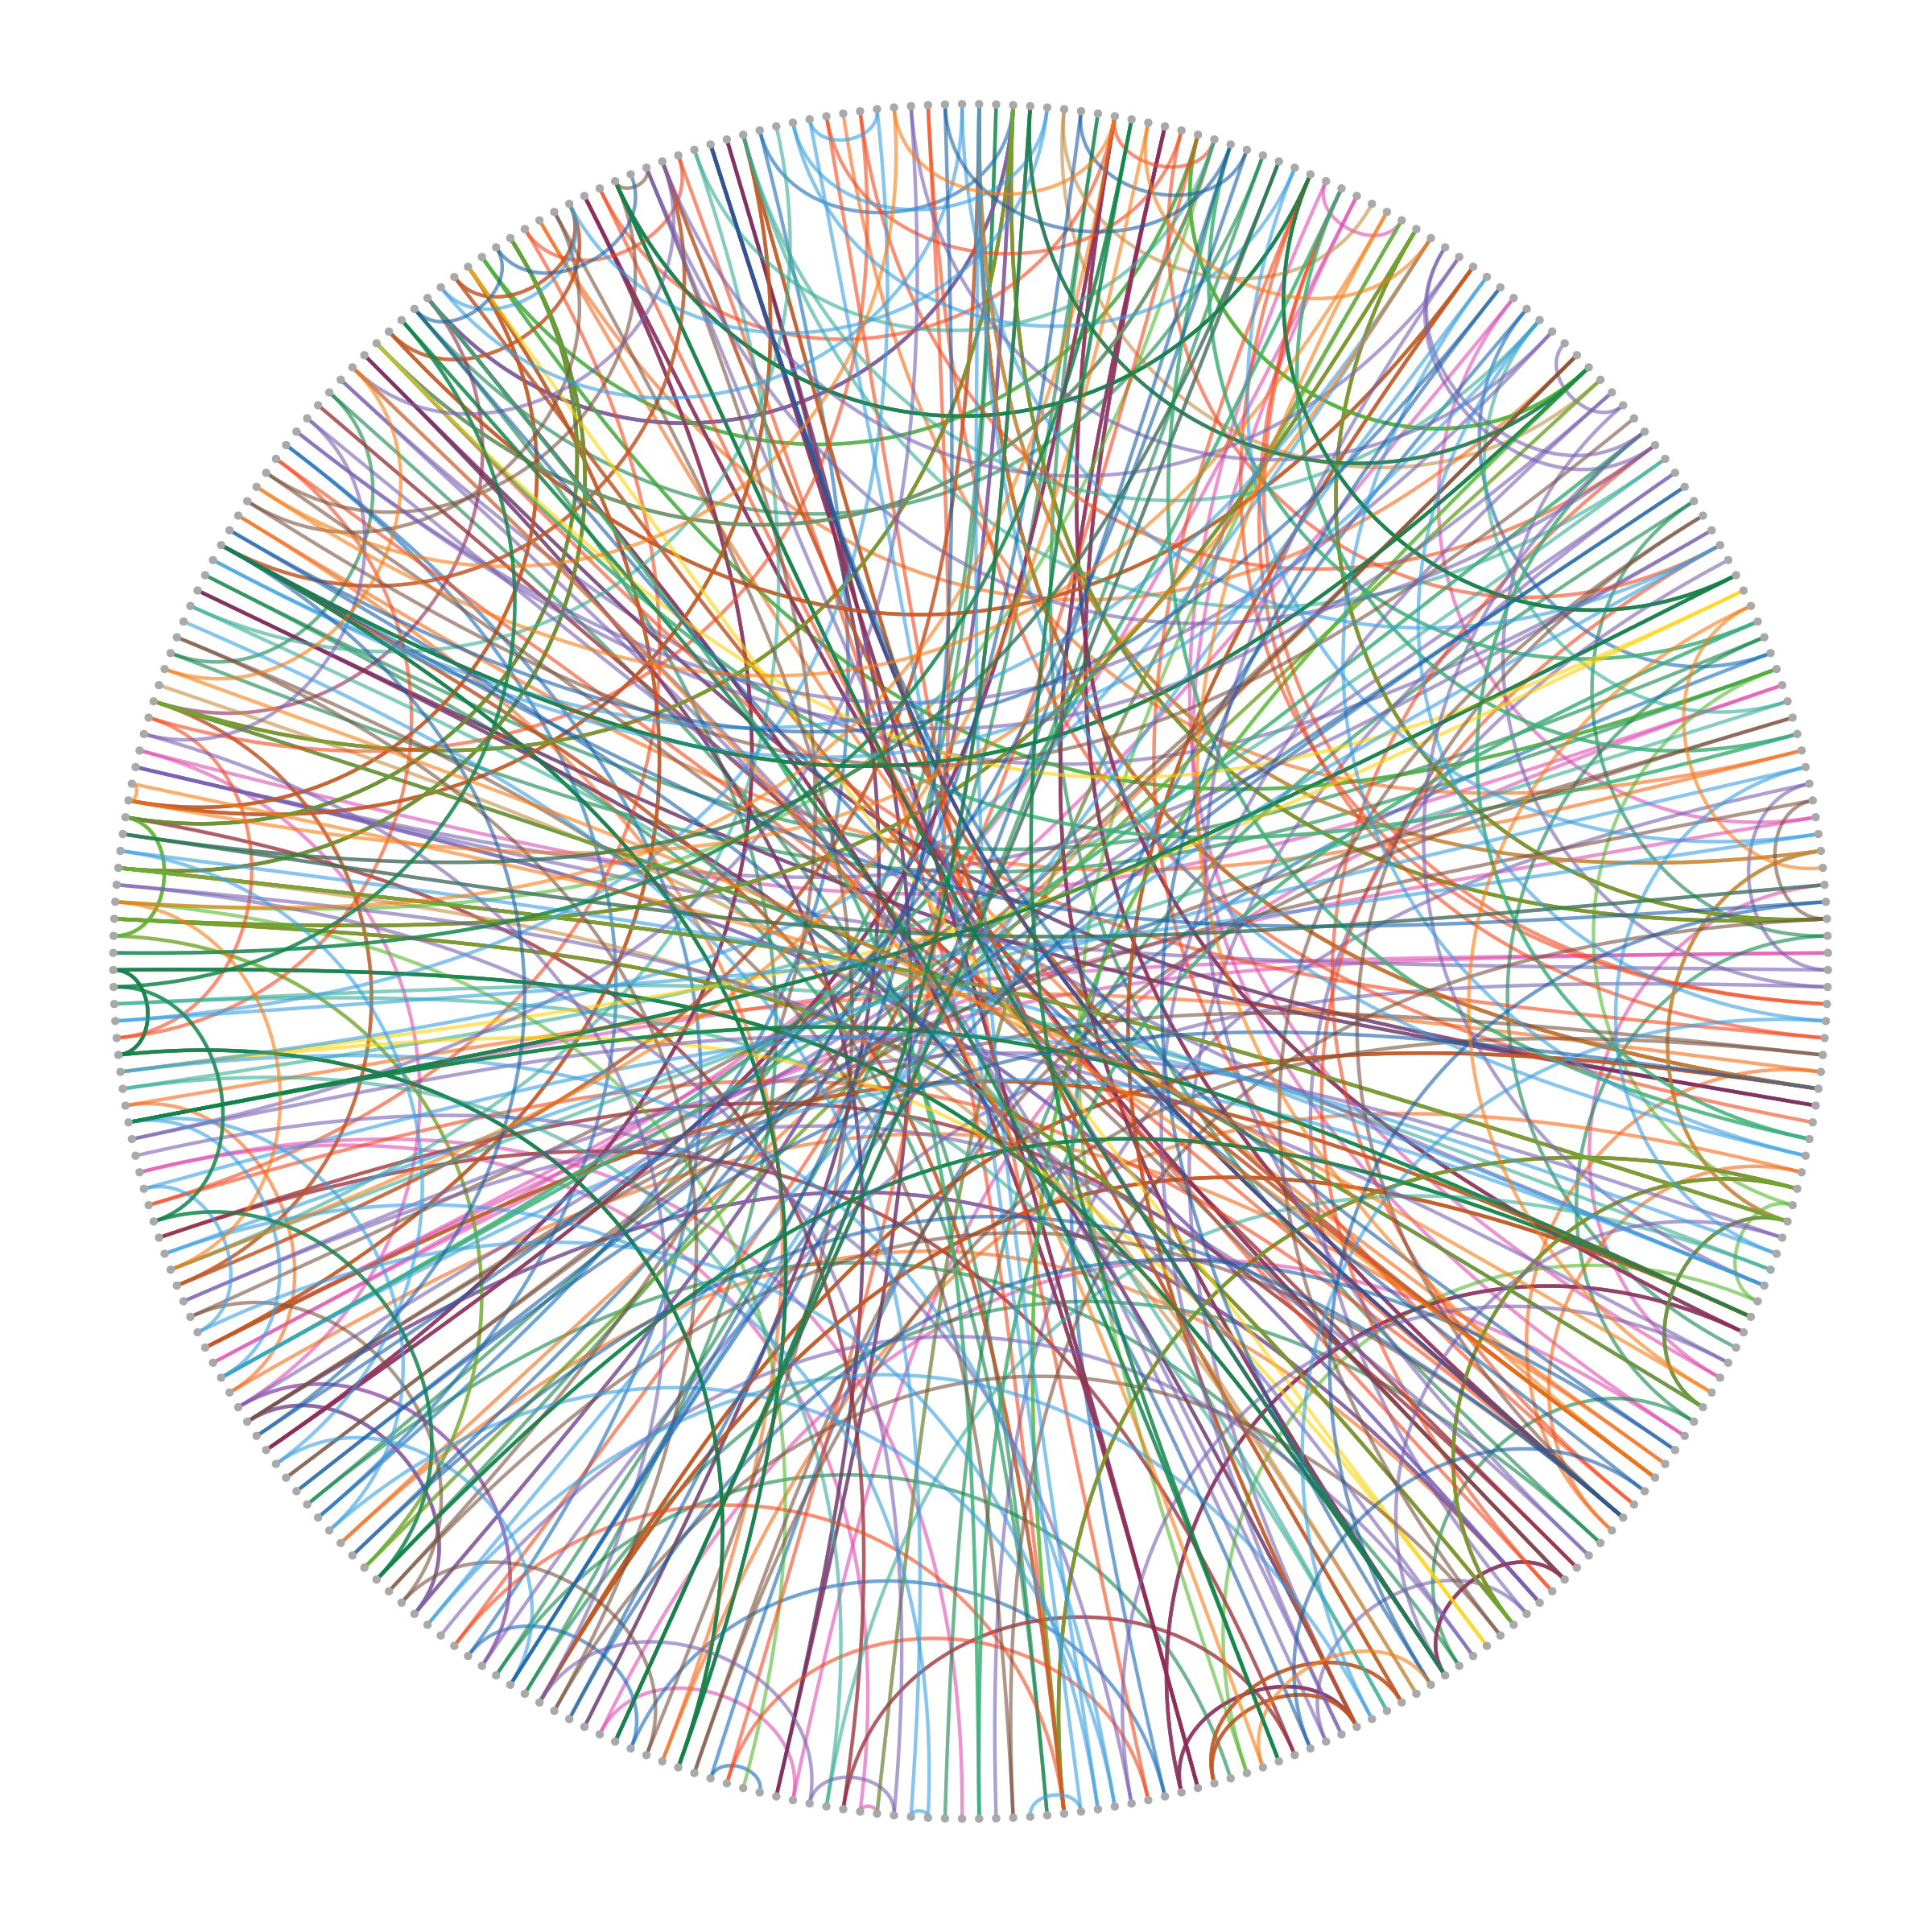 Berlin traffic network graph visualisation with random node order